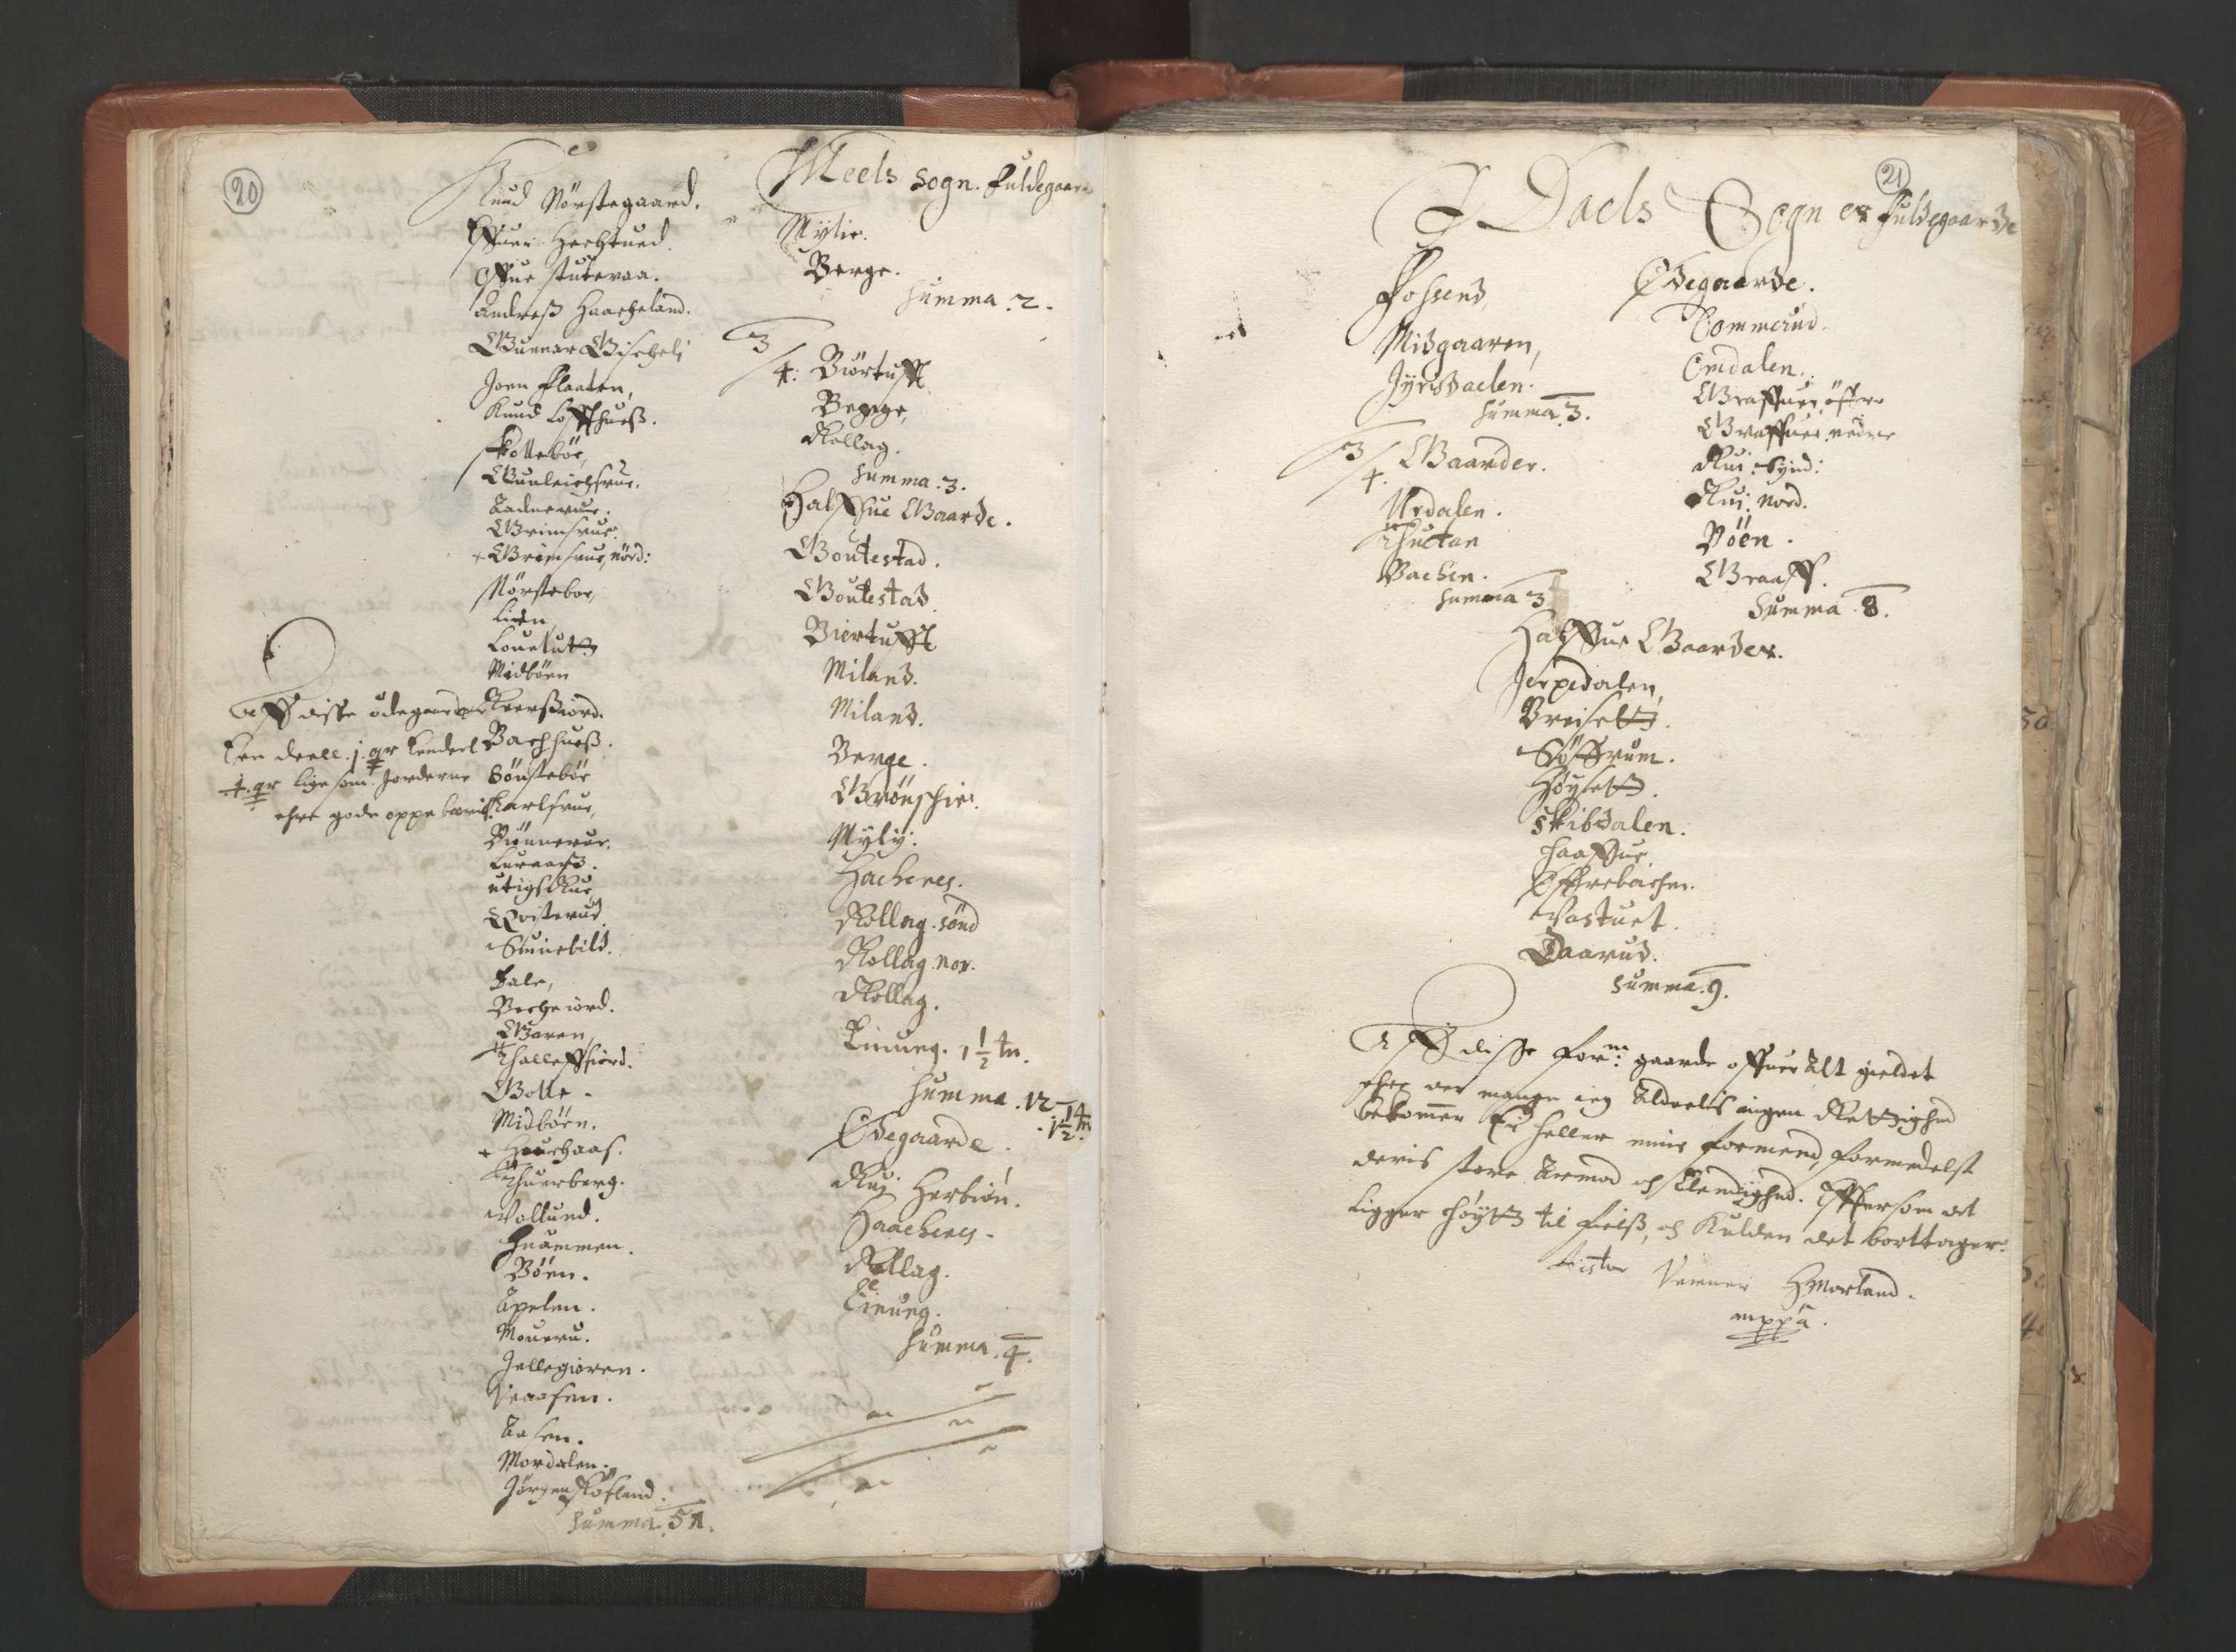 RA, Vicar's Census 1664-1666, no. 12: Øvre Telemark deanery, Nedre Telemark deanery and Bamble deanery, 1664-1666, p. 20-21